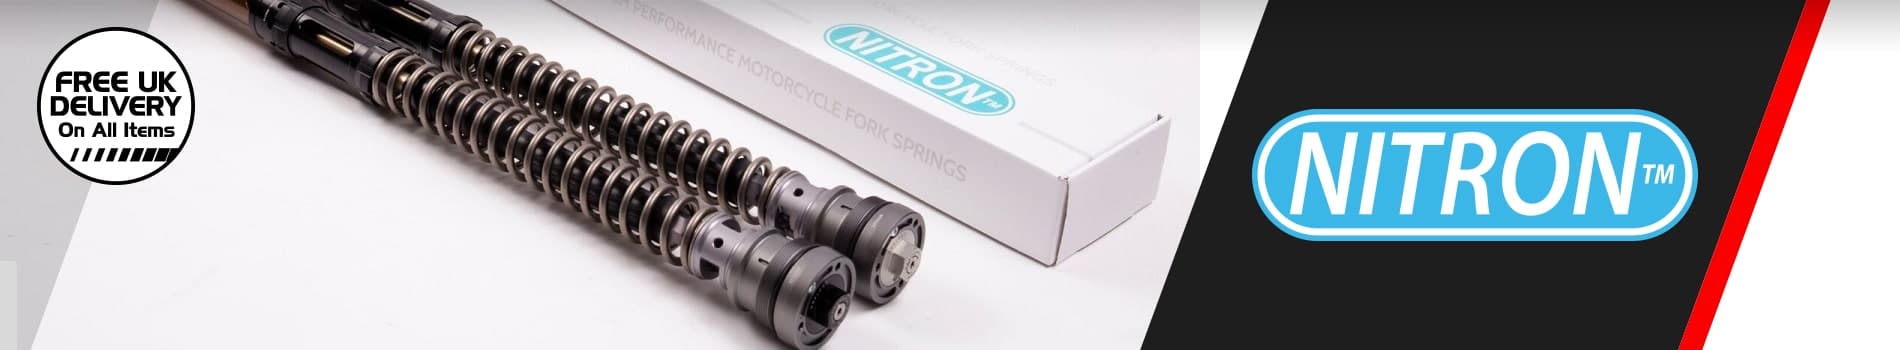 Nitron TVT Cartridge Kits - Free UK Delivery